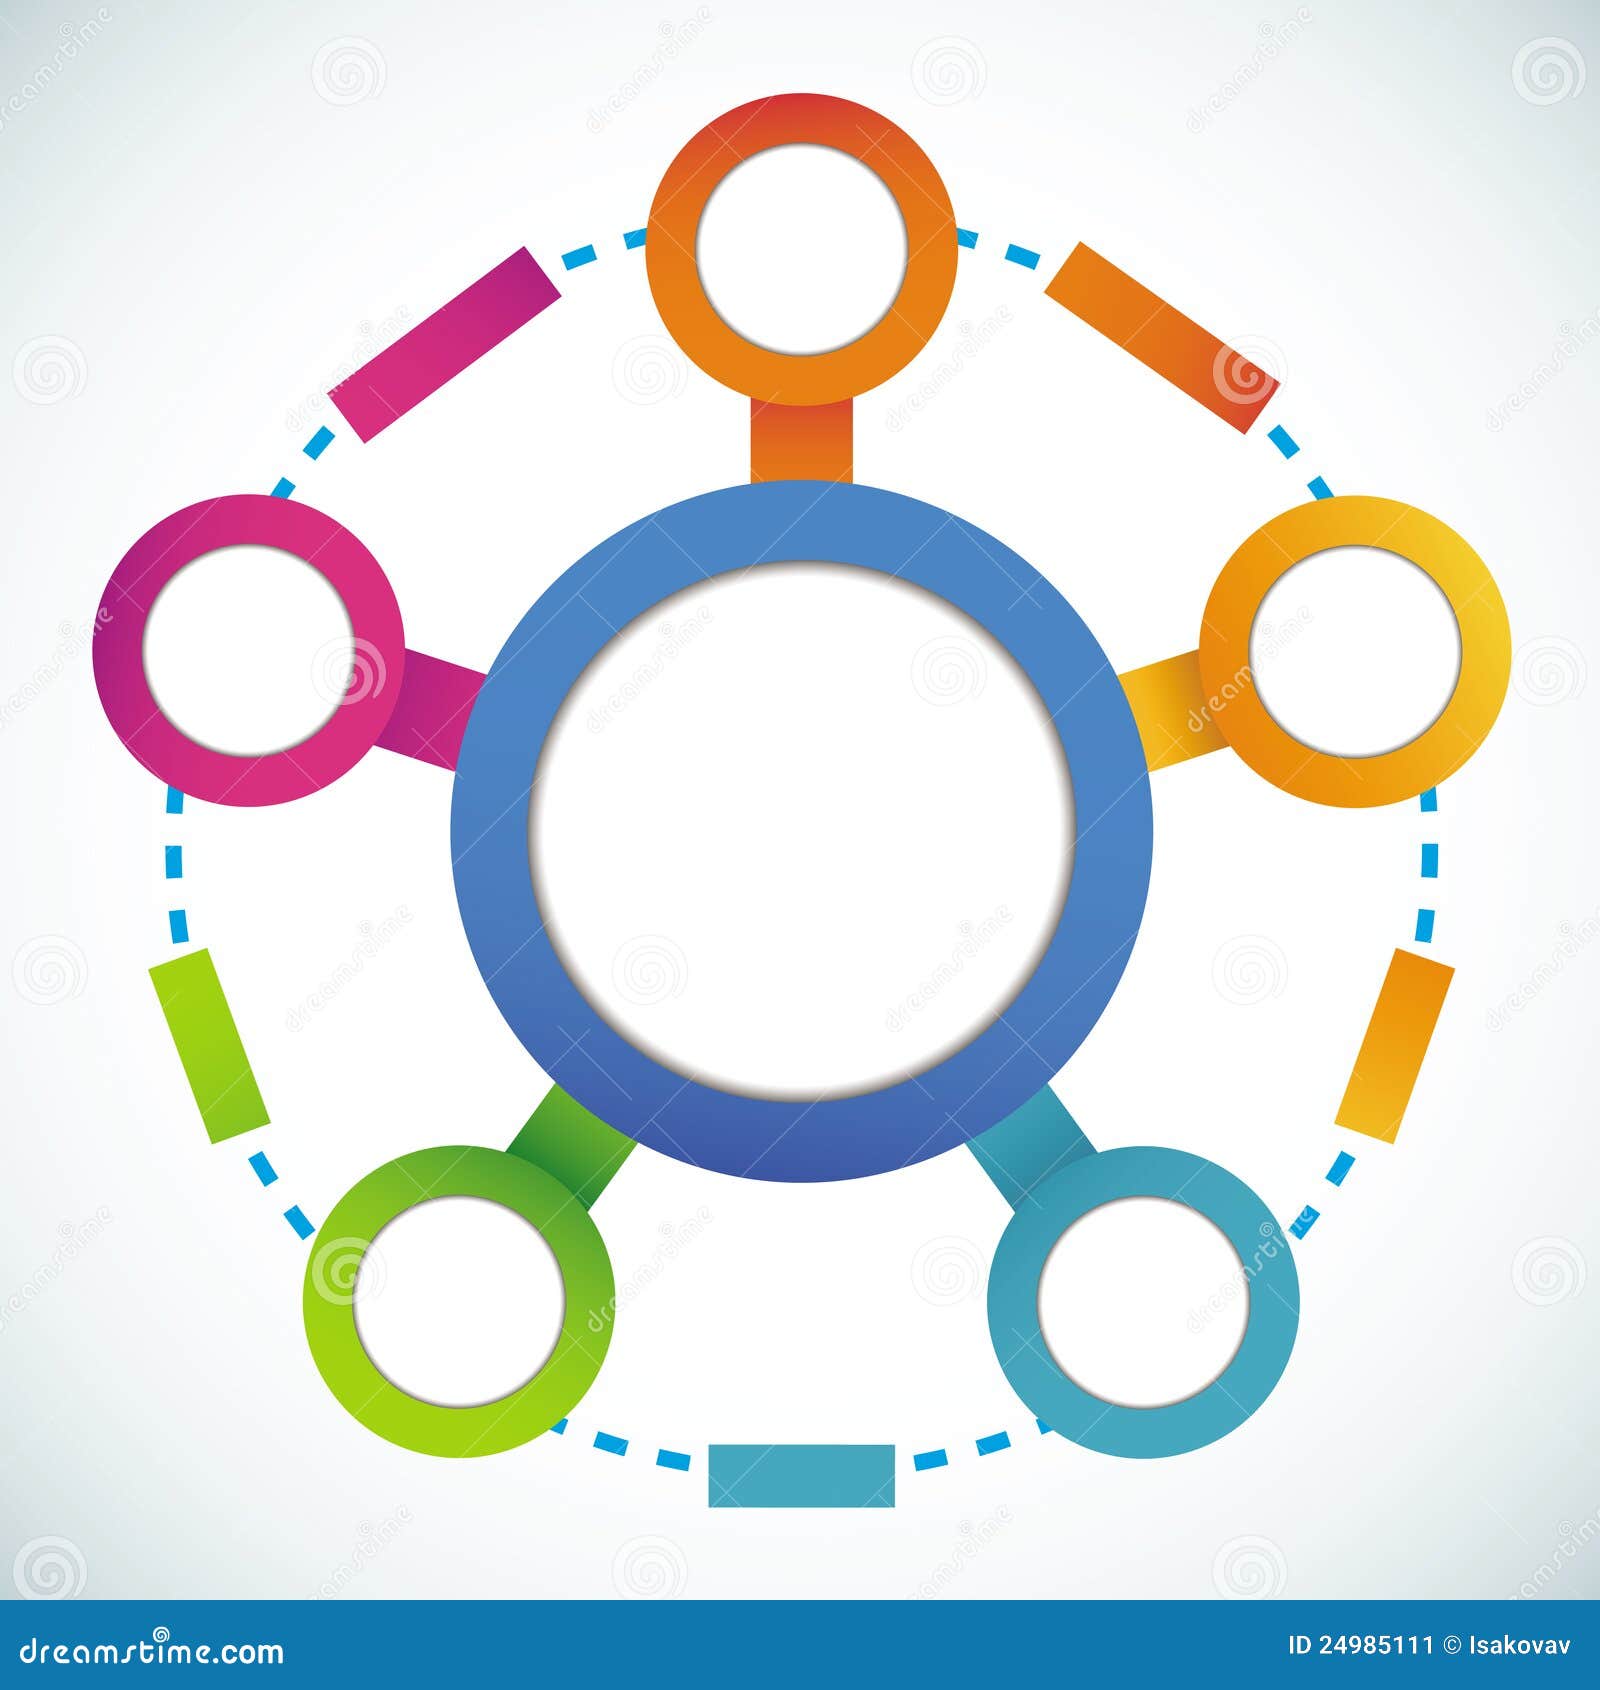 Empty Color Circle Marketing Flowchart Stock Image - Image ...